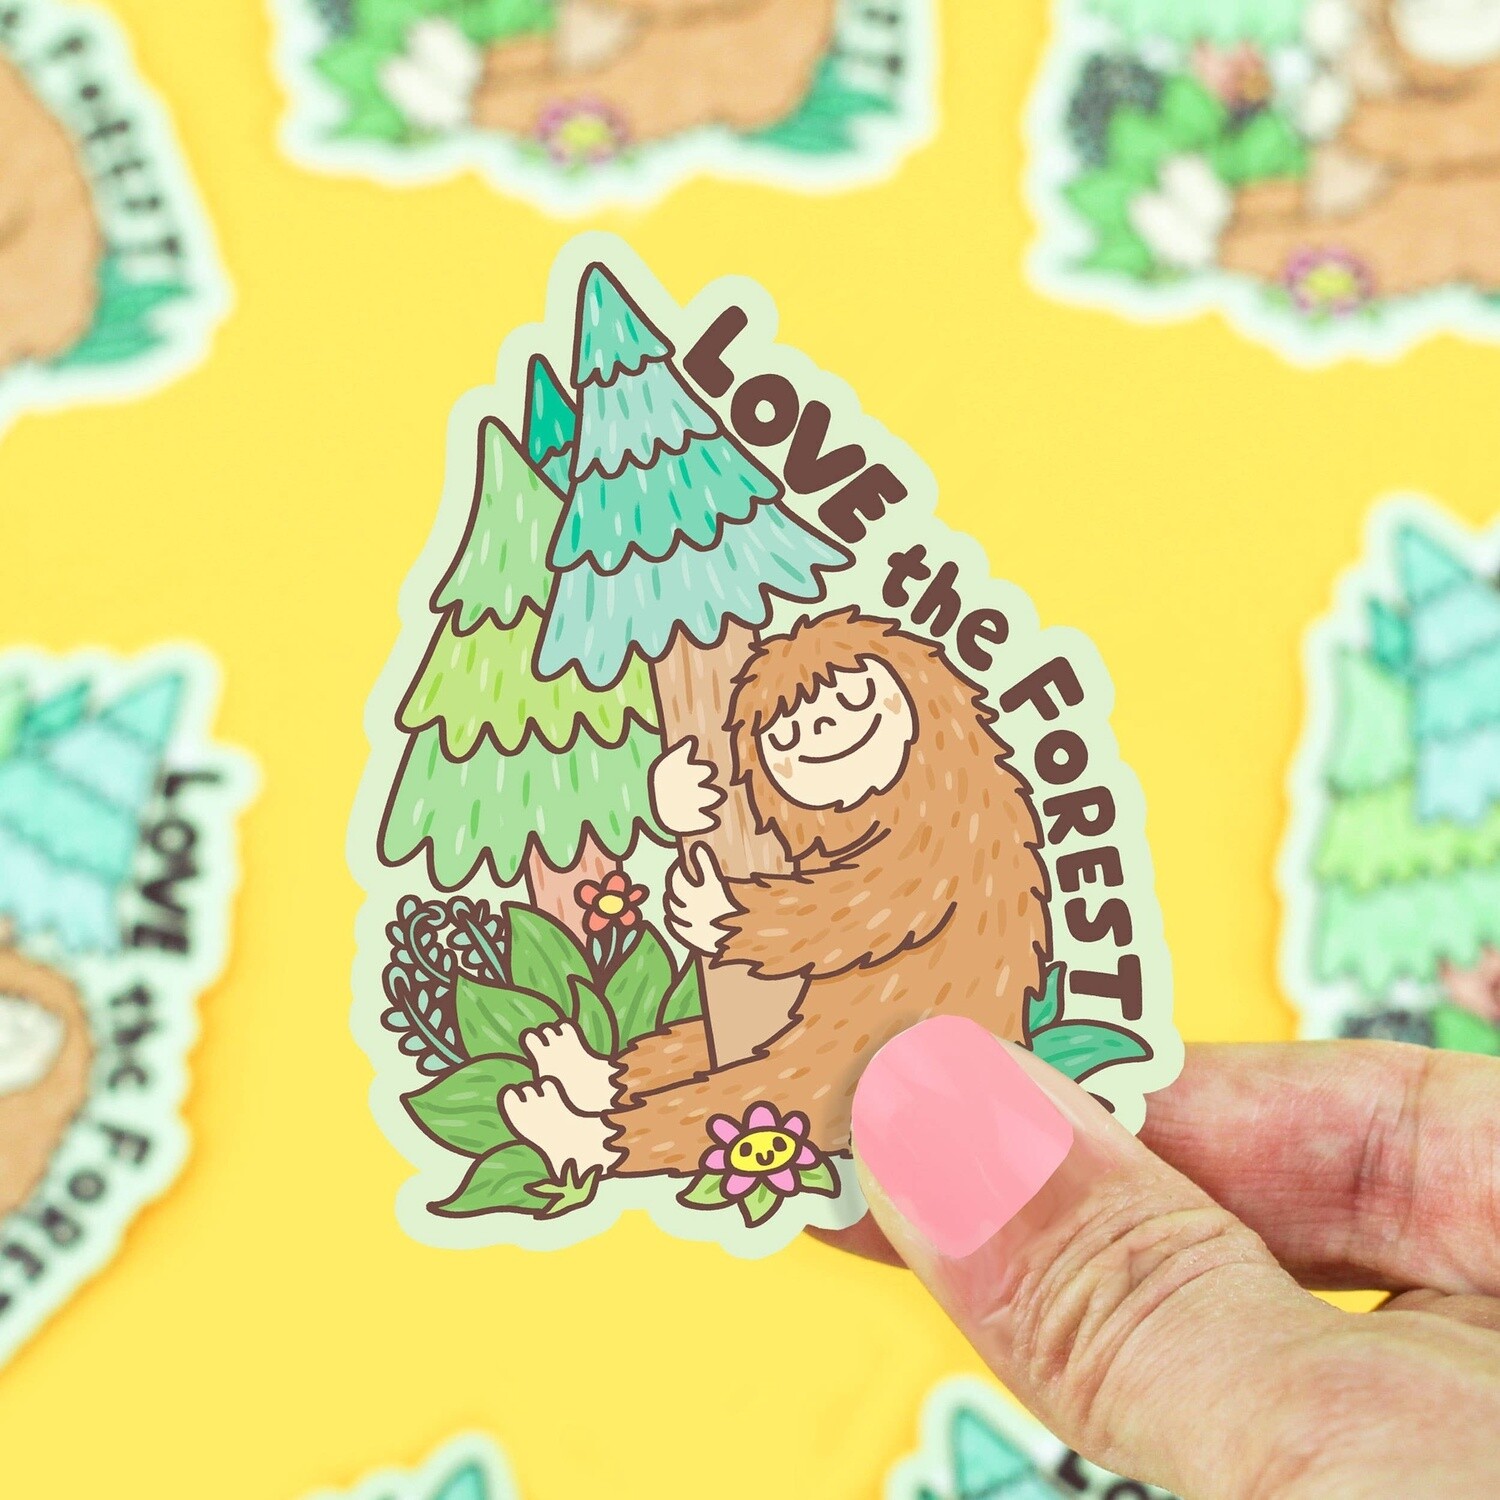 Turtle's Soup - Love The Forest Bigfoot Sasquatch Car Decal Vinyl Sticker